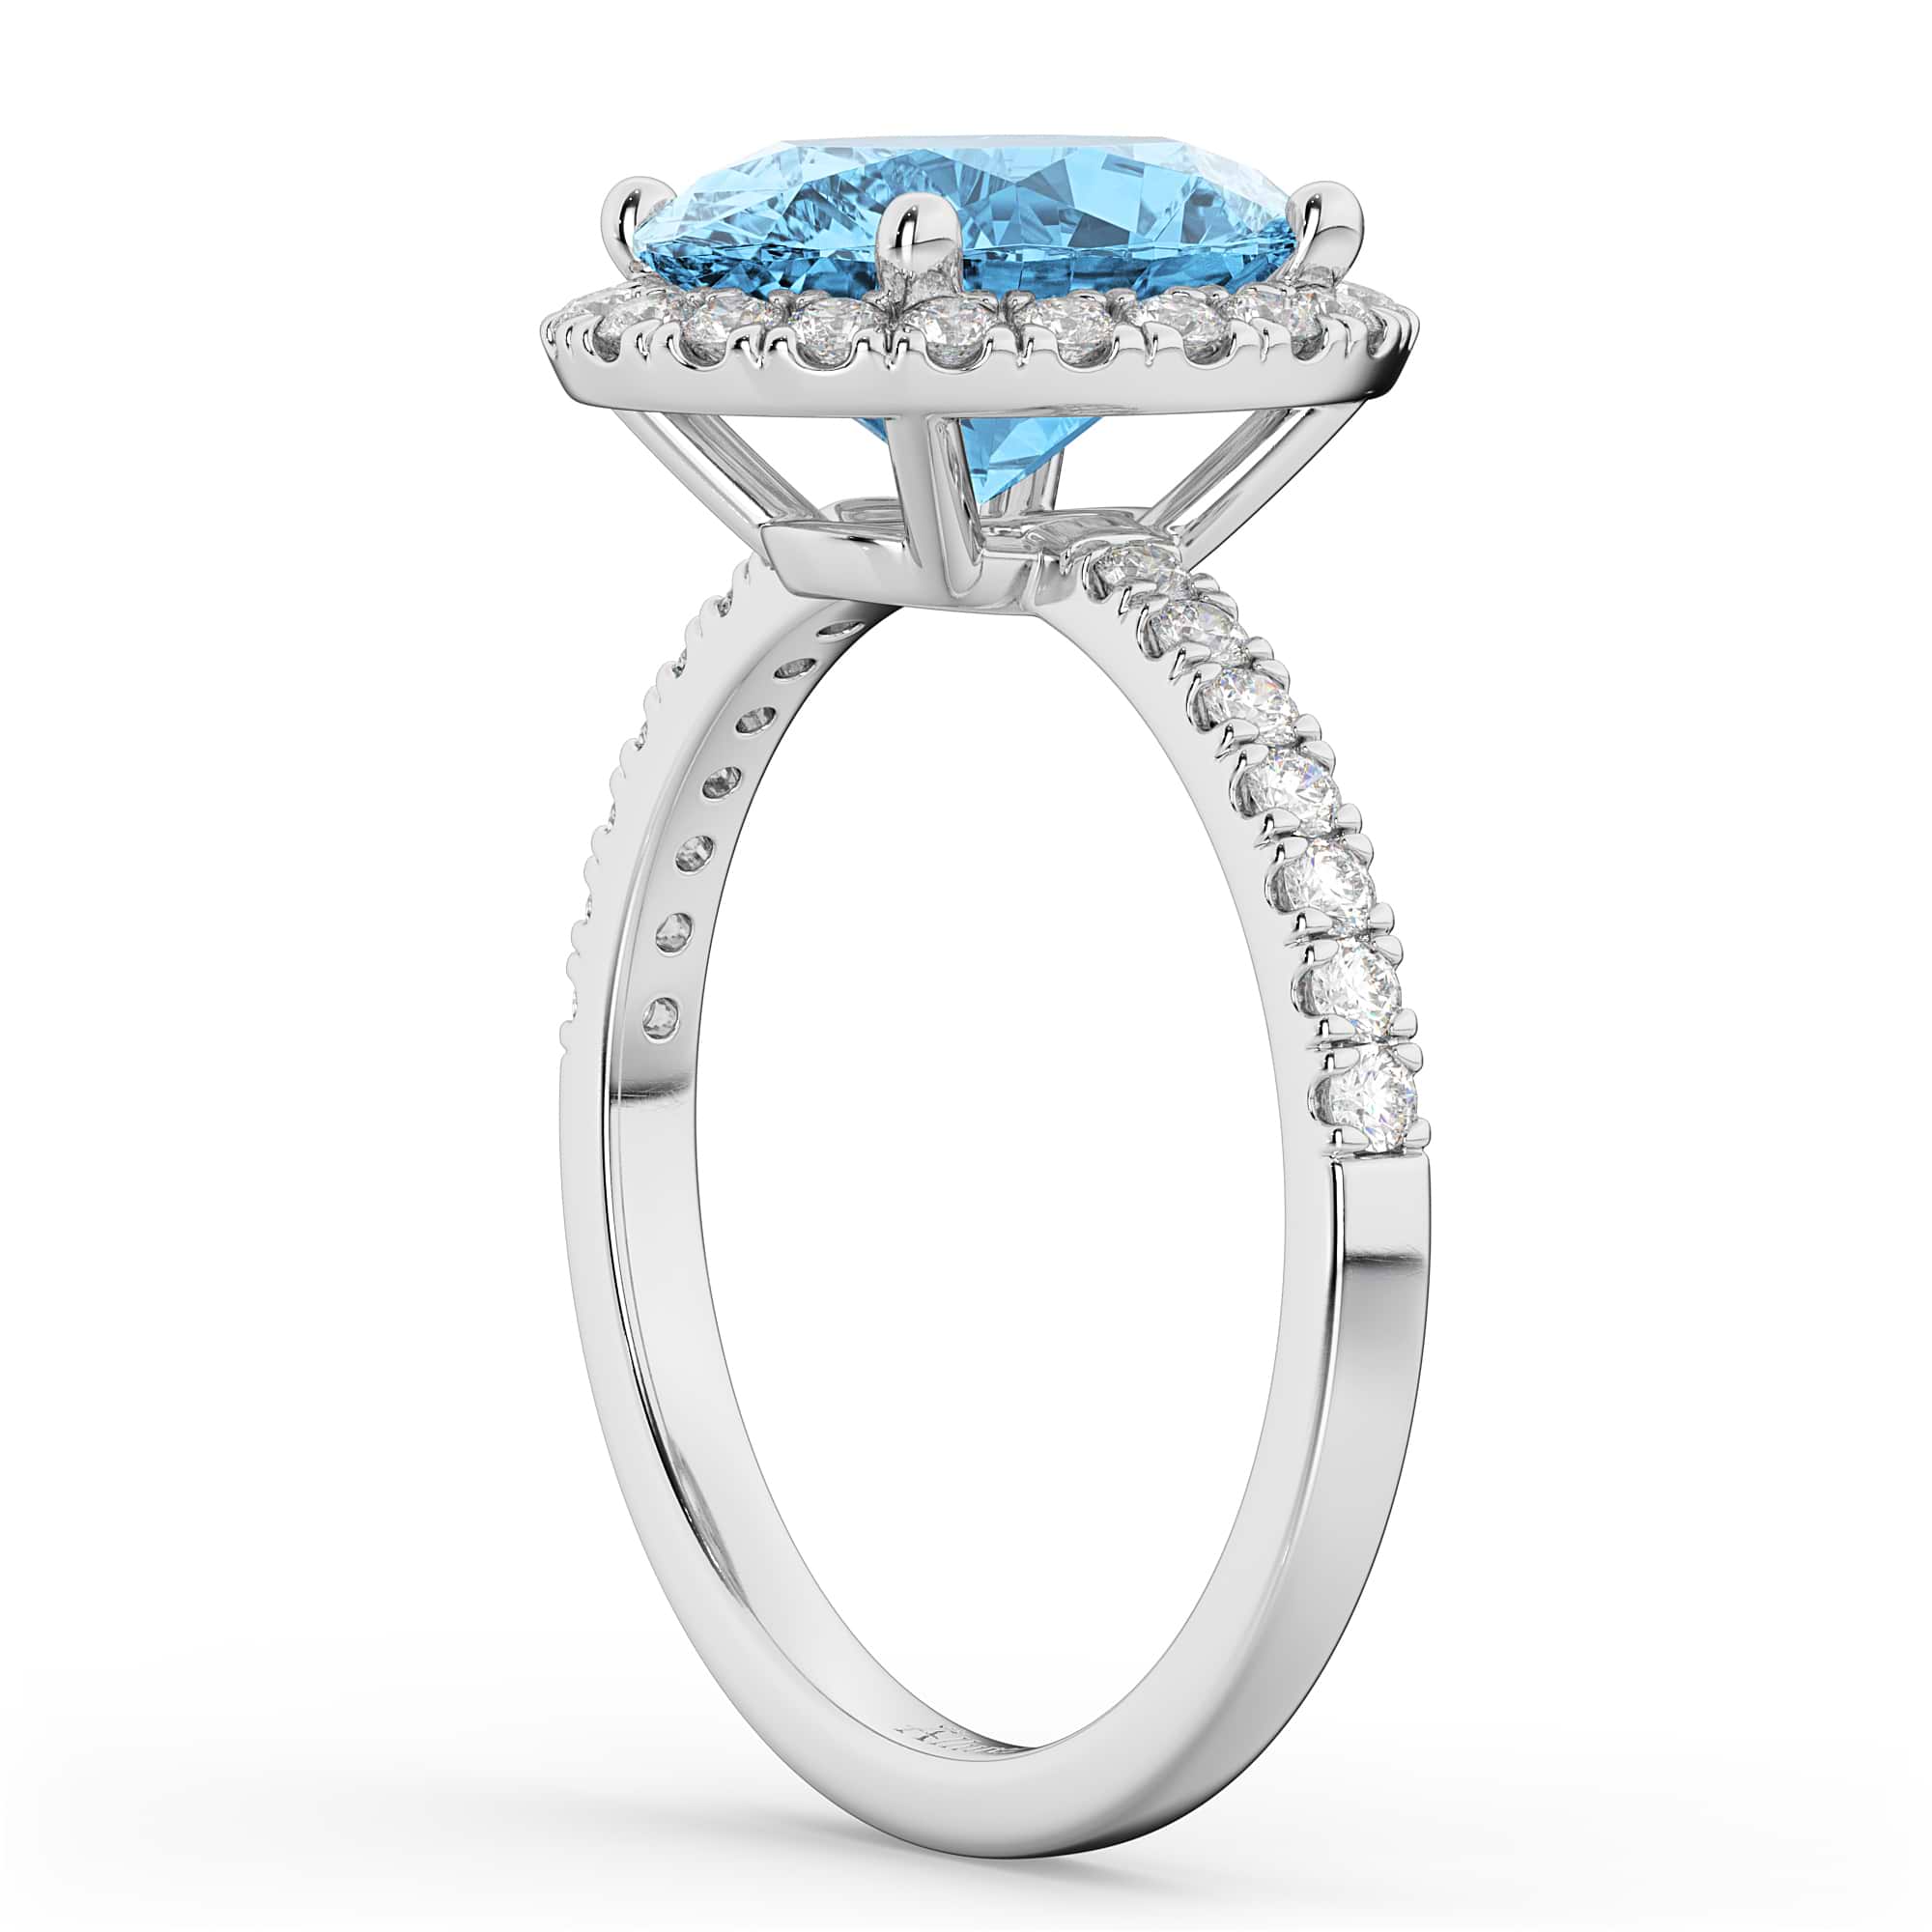 Oval Cut Halo Blue Topaz & Diamond Engagement Ring 14K White Gold 4.01ct